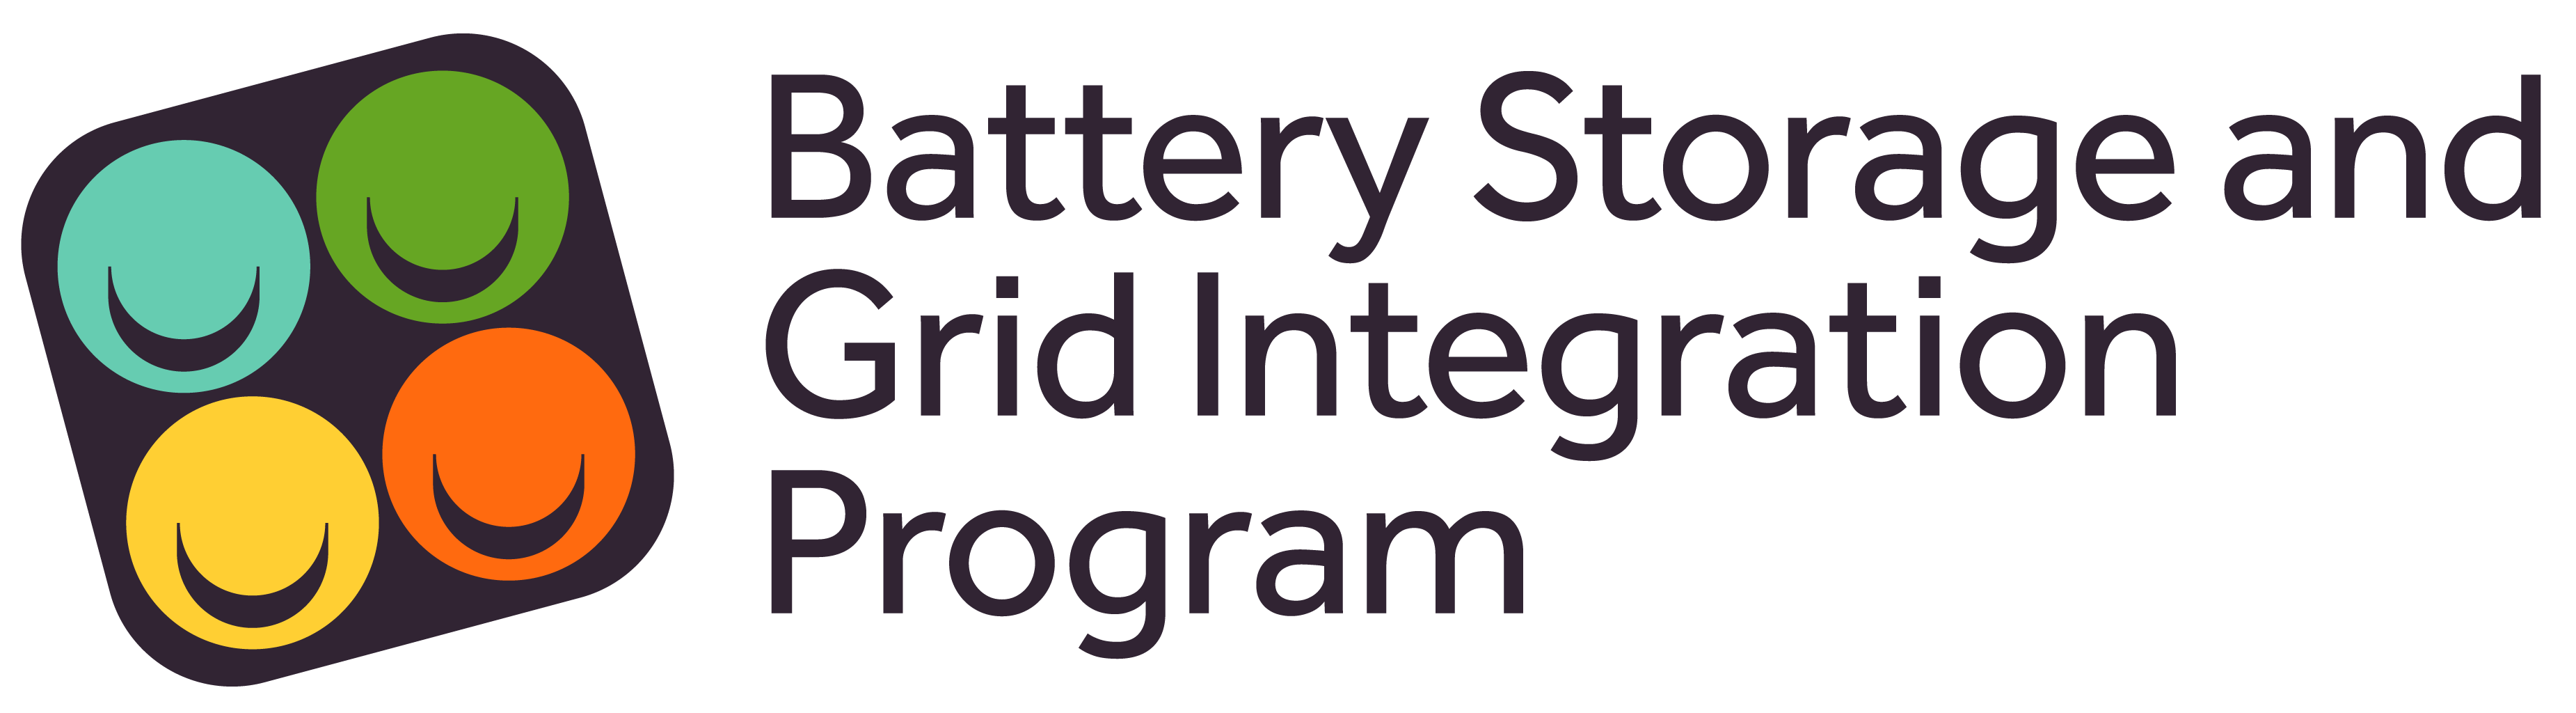 Battery Storage and Grid Integration Program